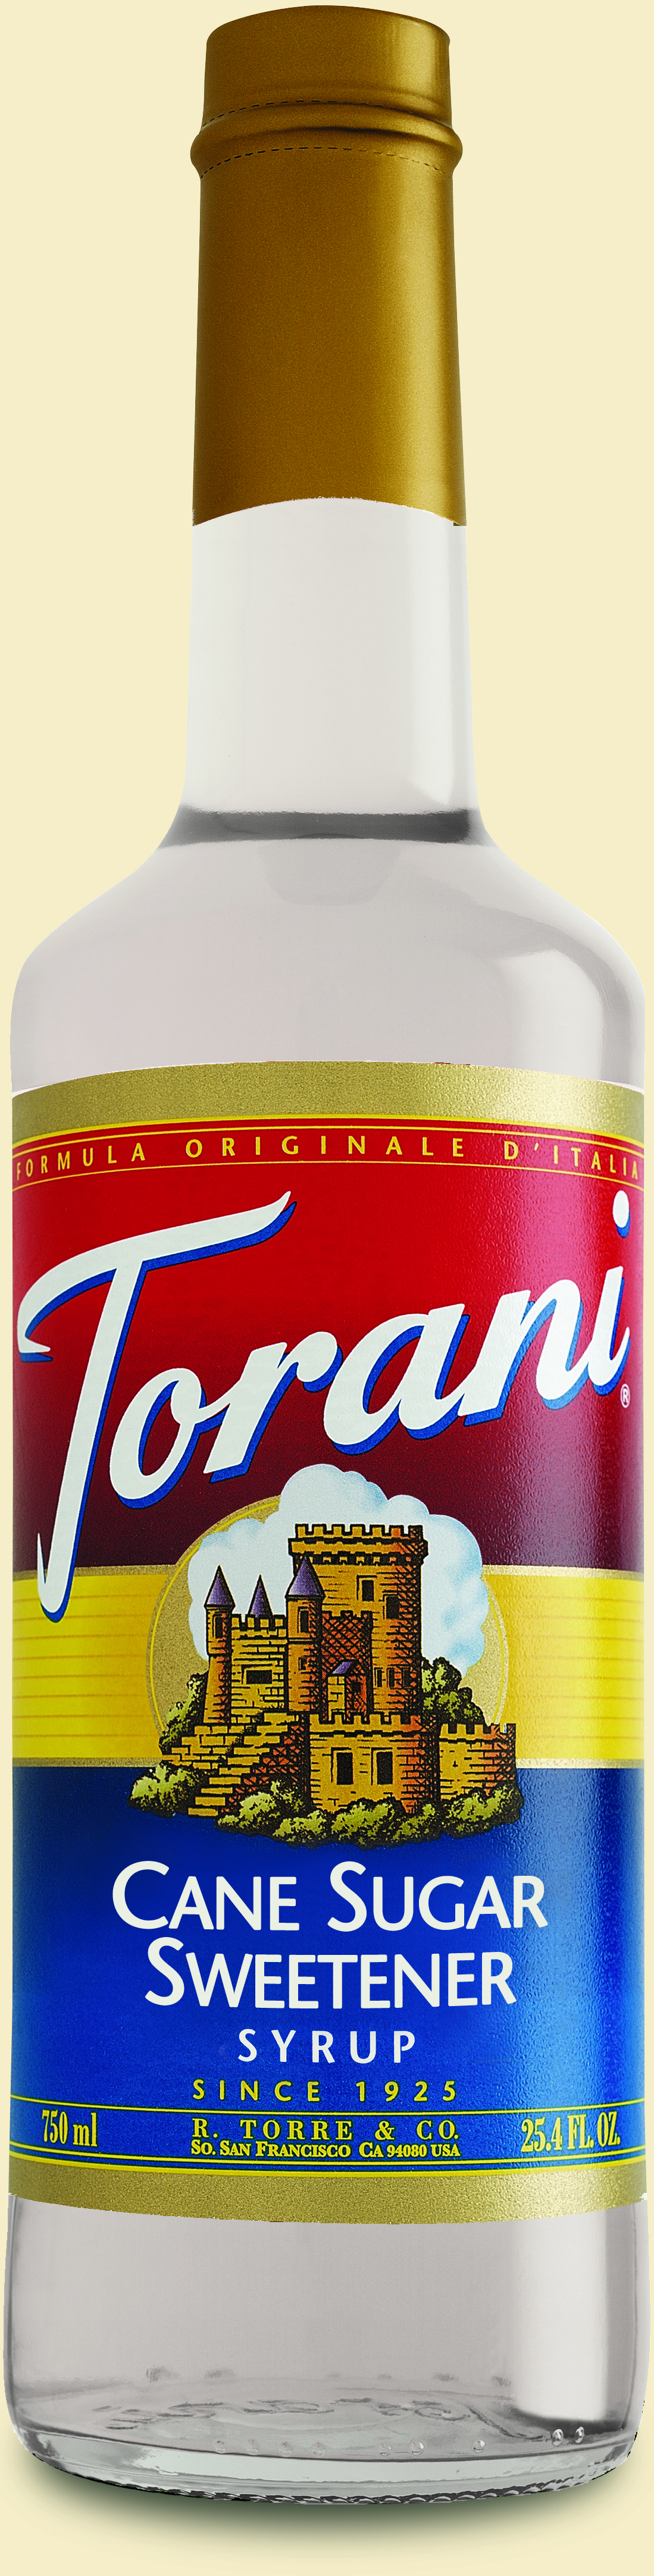 Torani Cane Sugar Sweetener 4/750ml - Sold by EA - Click Image to Close